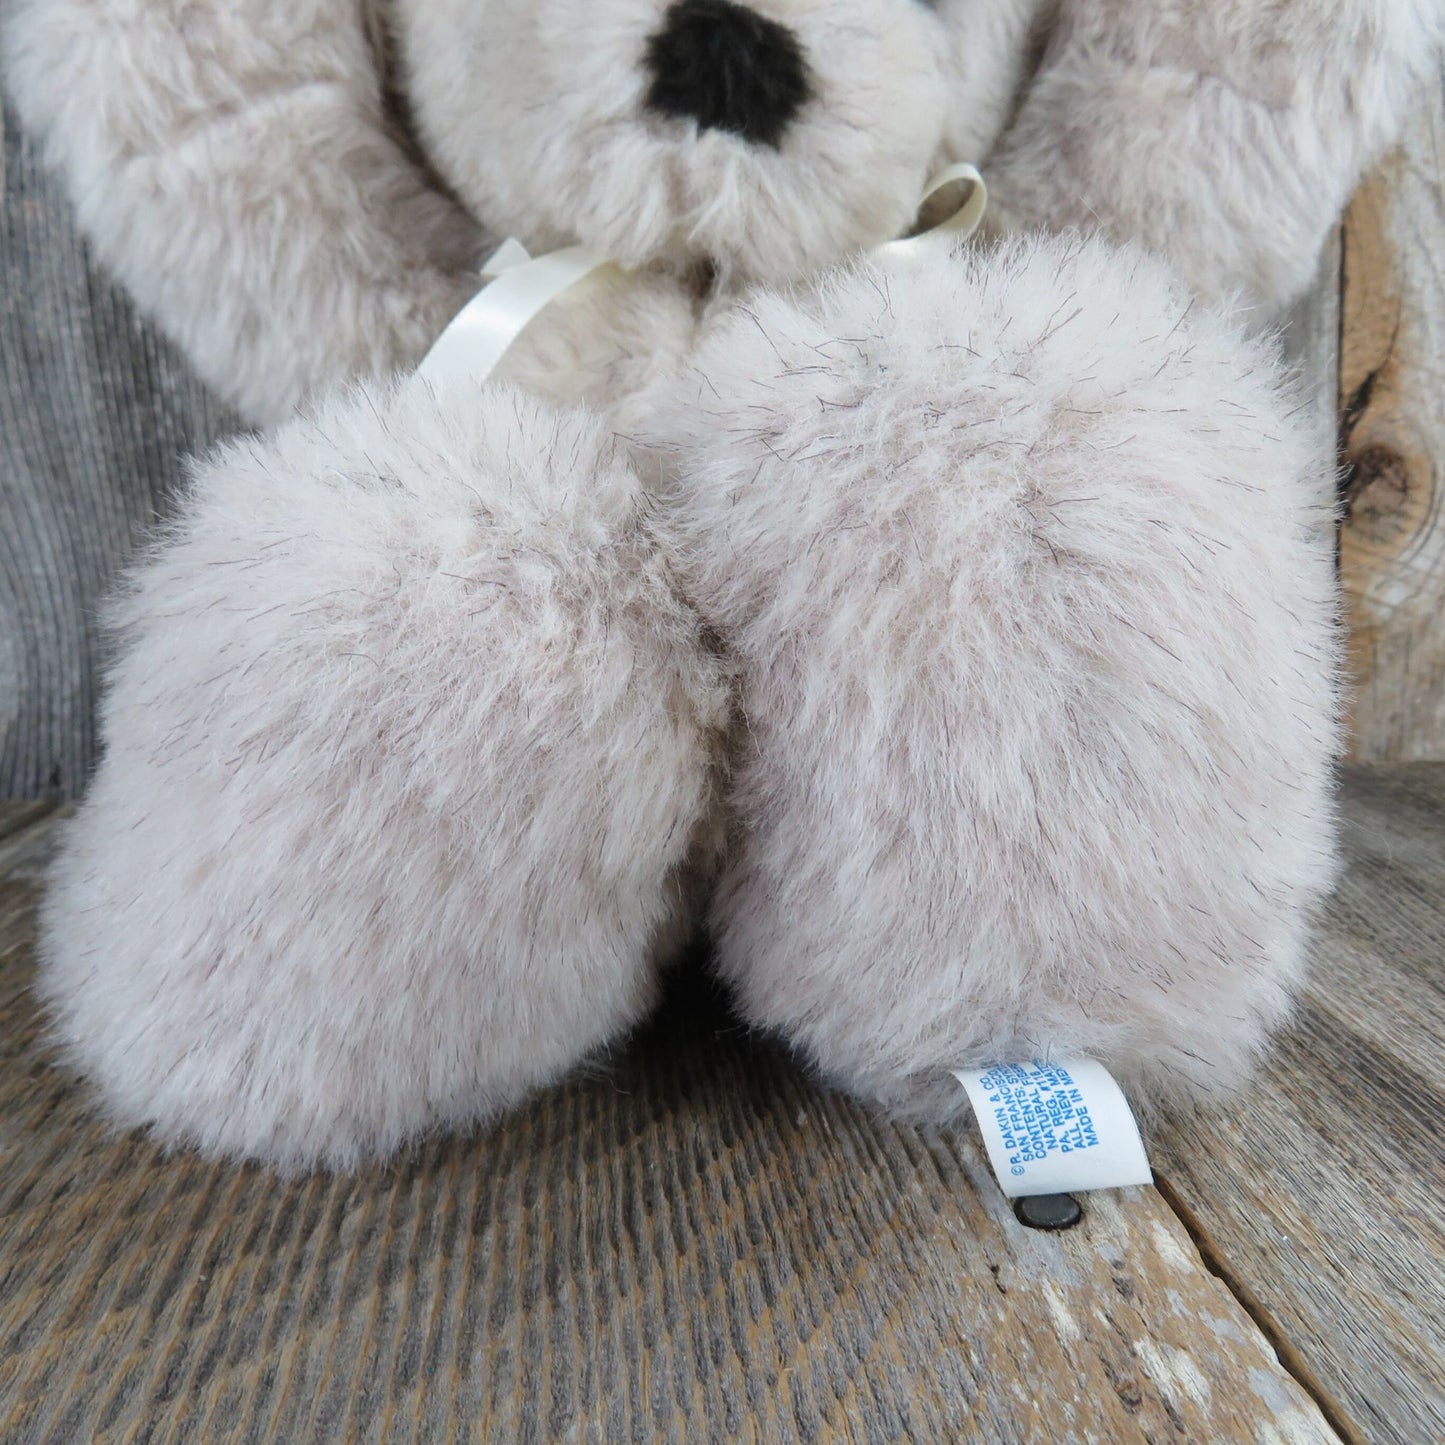 Vintage Teddy Bear Cuddles Plush Arms Up Gray Beige Stuffed Animal 1979